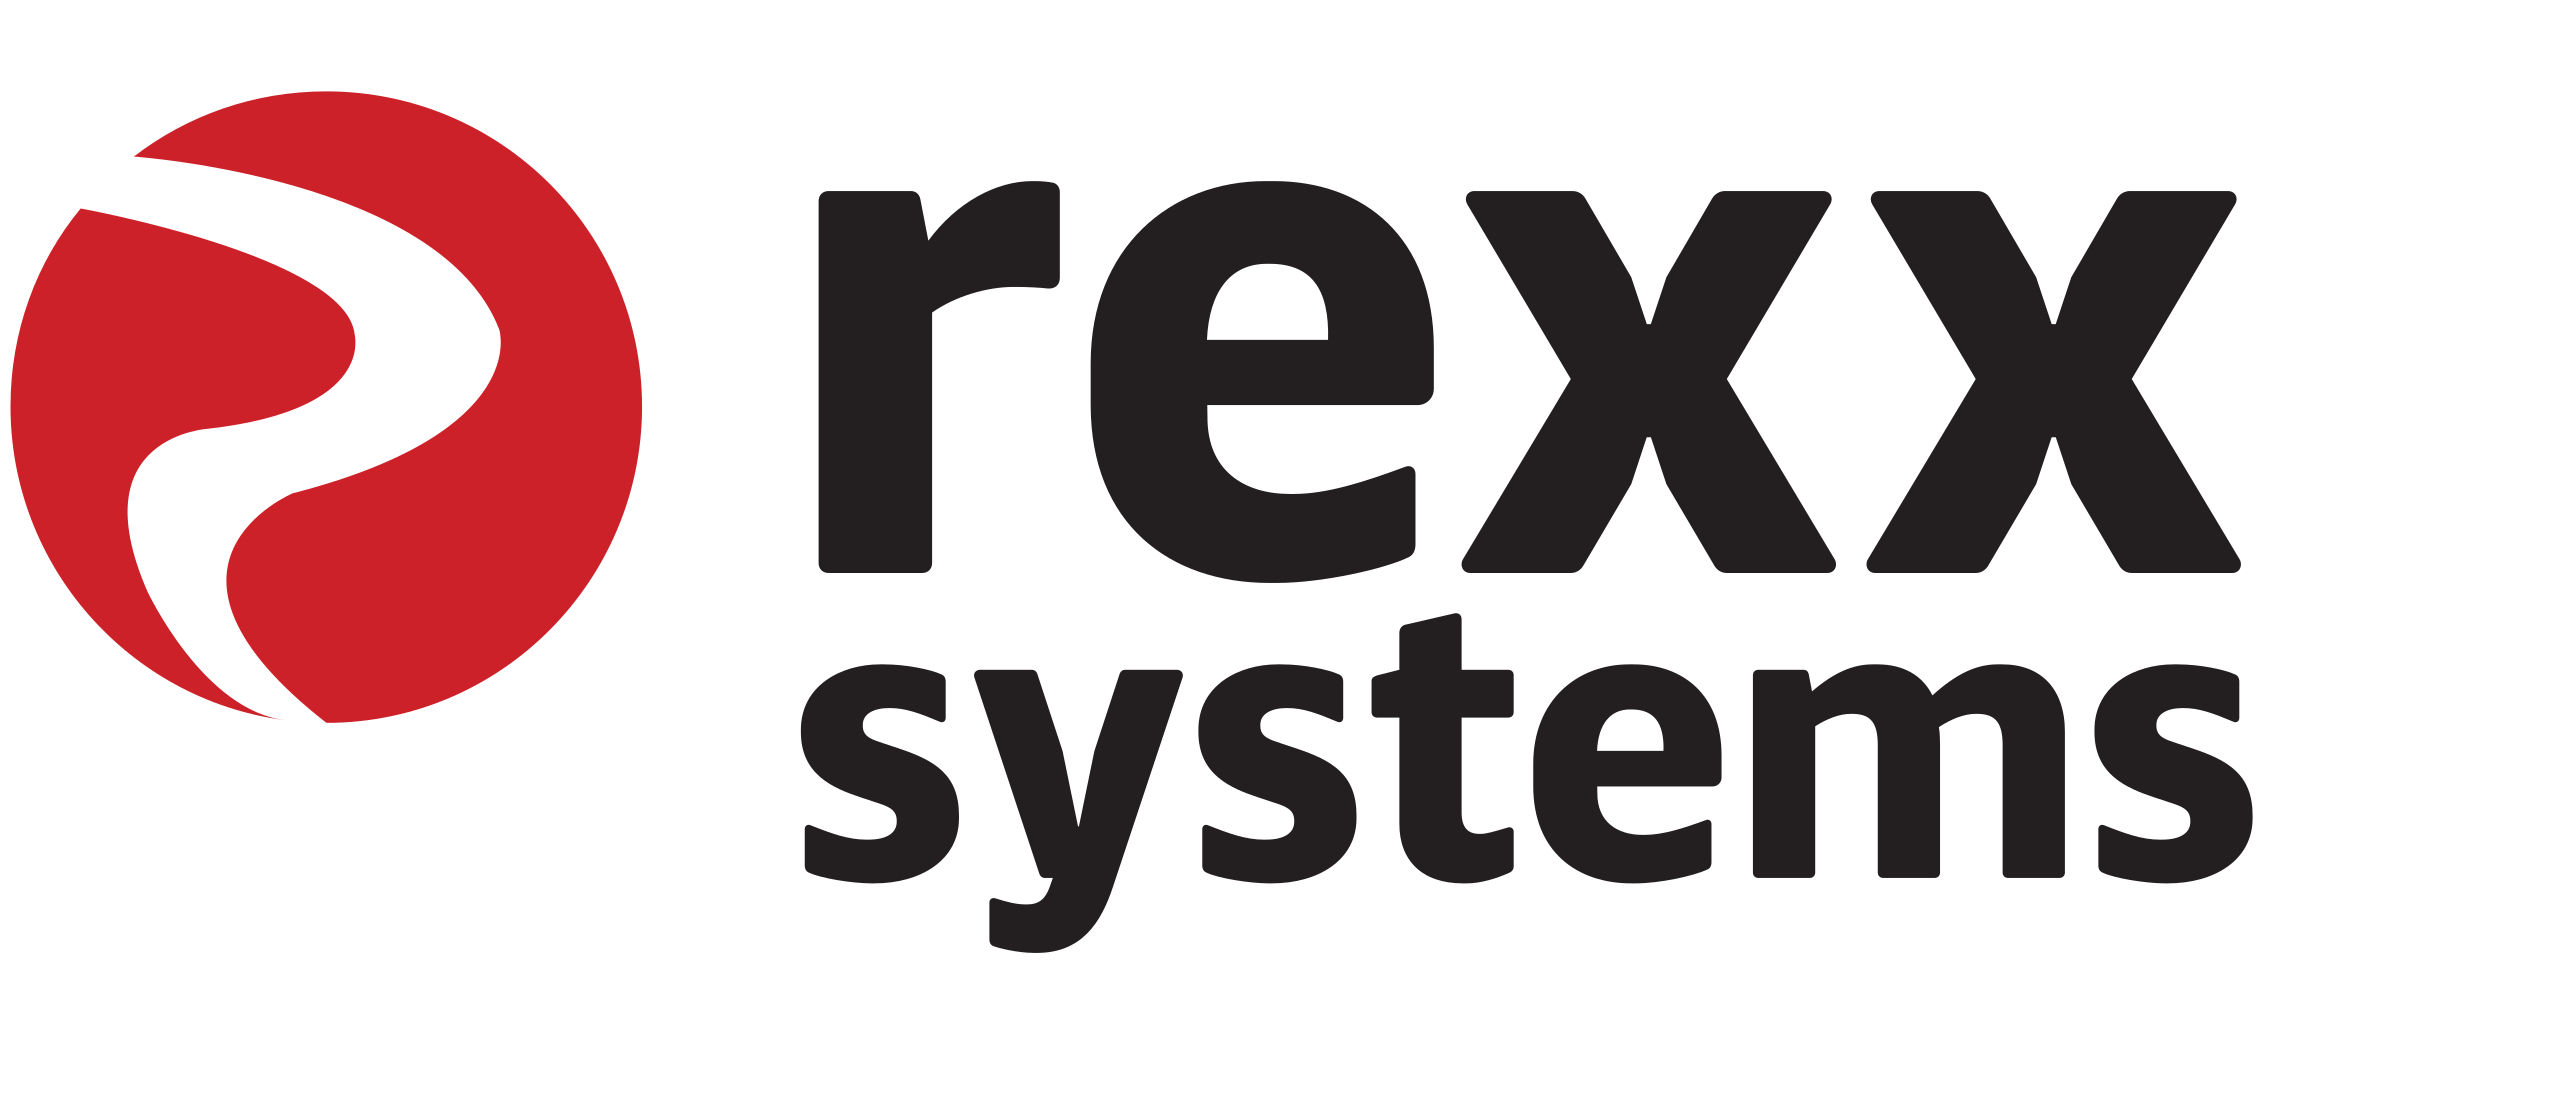 evernine-referenzen-rexx-systems-logo